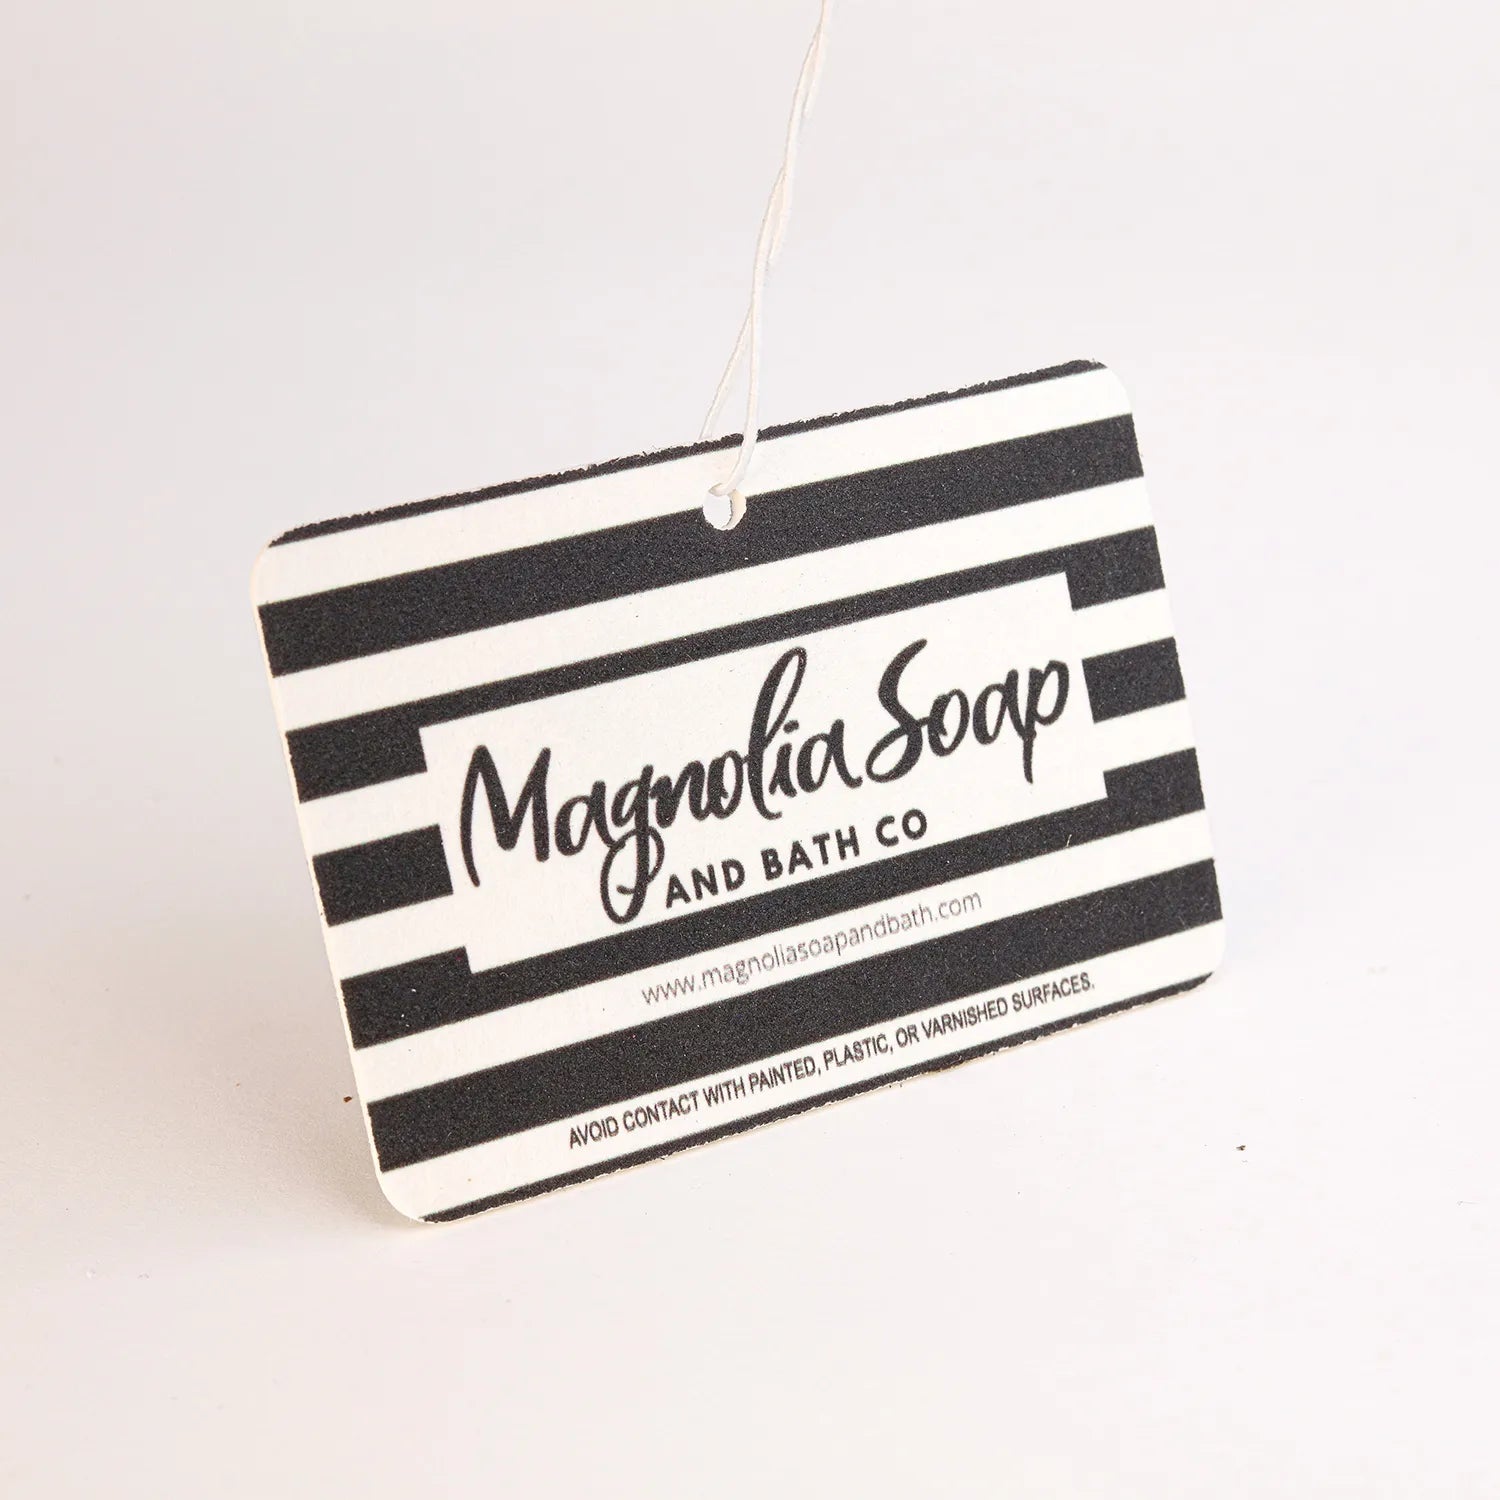 Magnolia Soap & bath - Car Freshie